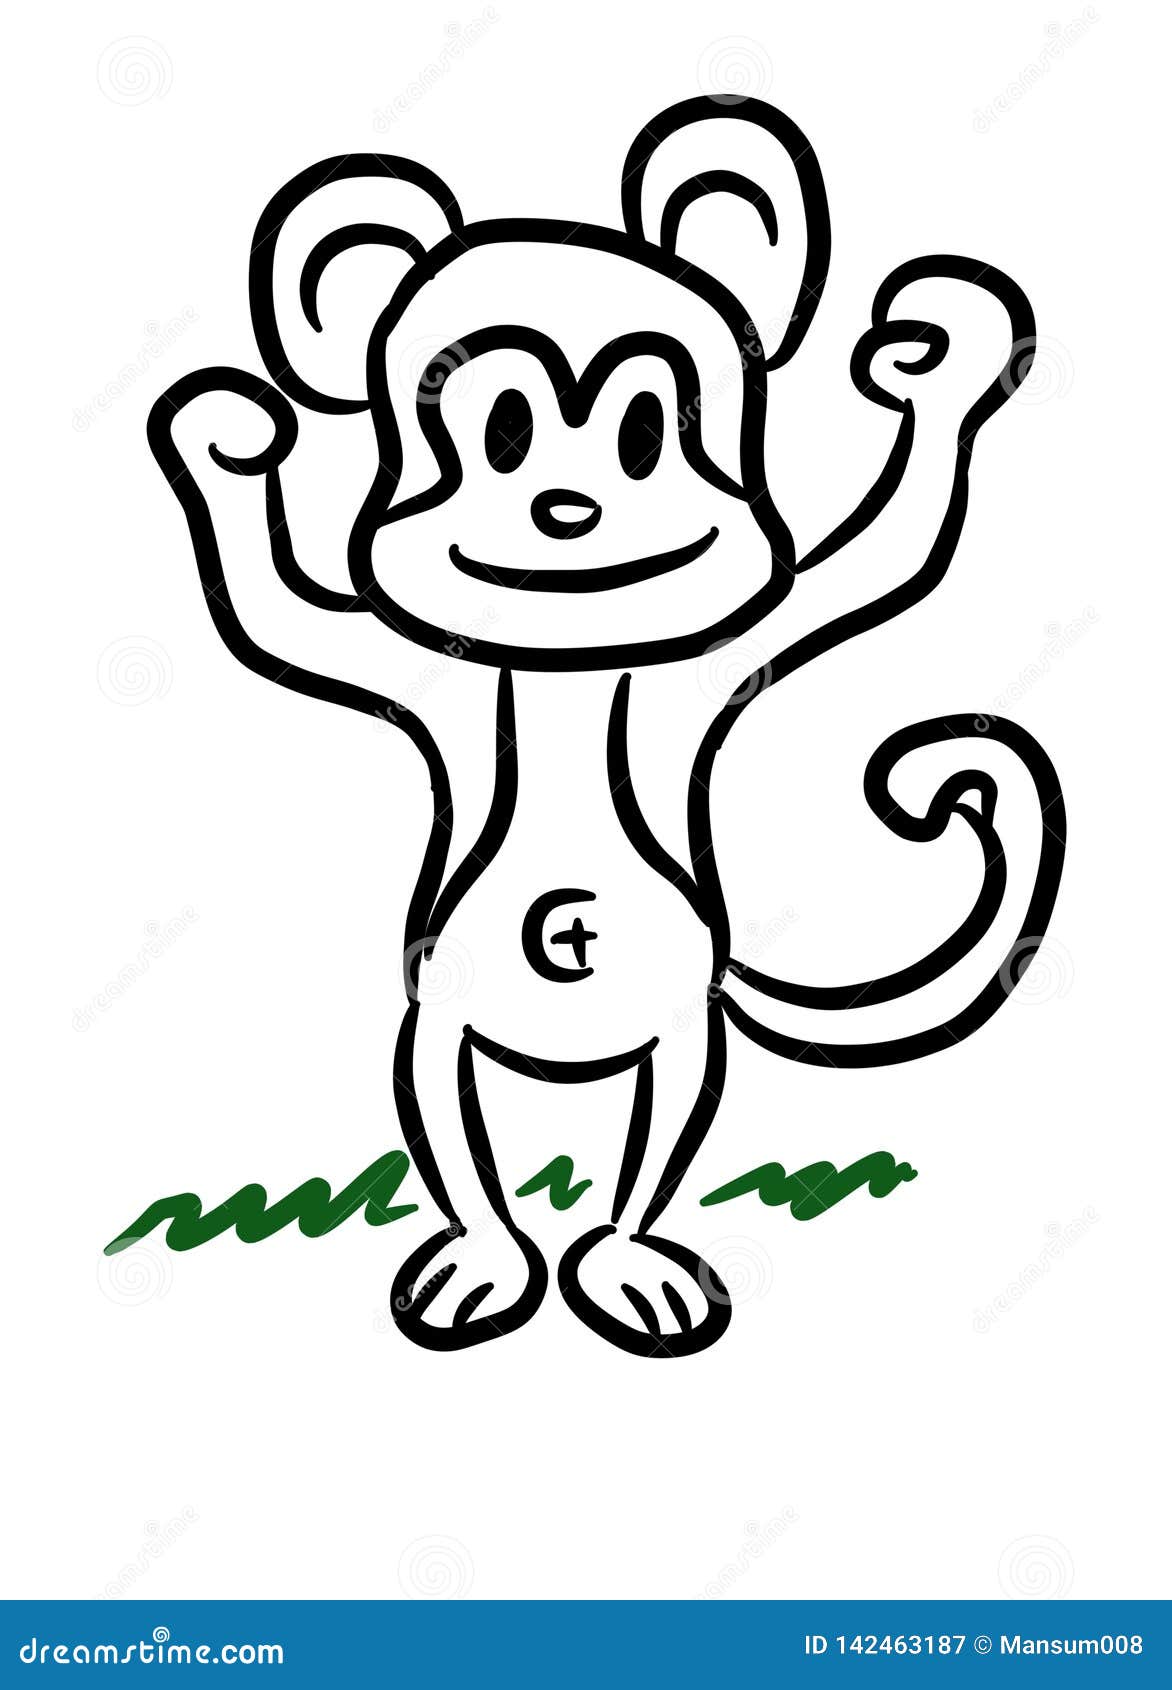 simple monkey drawing - Google Search | Monkey drawing, Cartoon monkey,  Monkey illustration